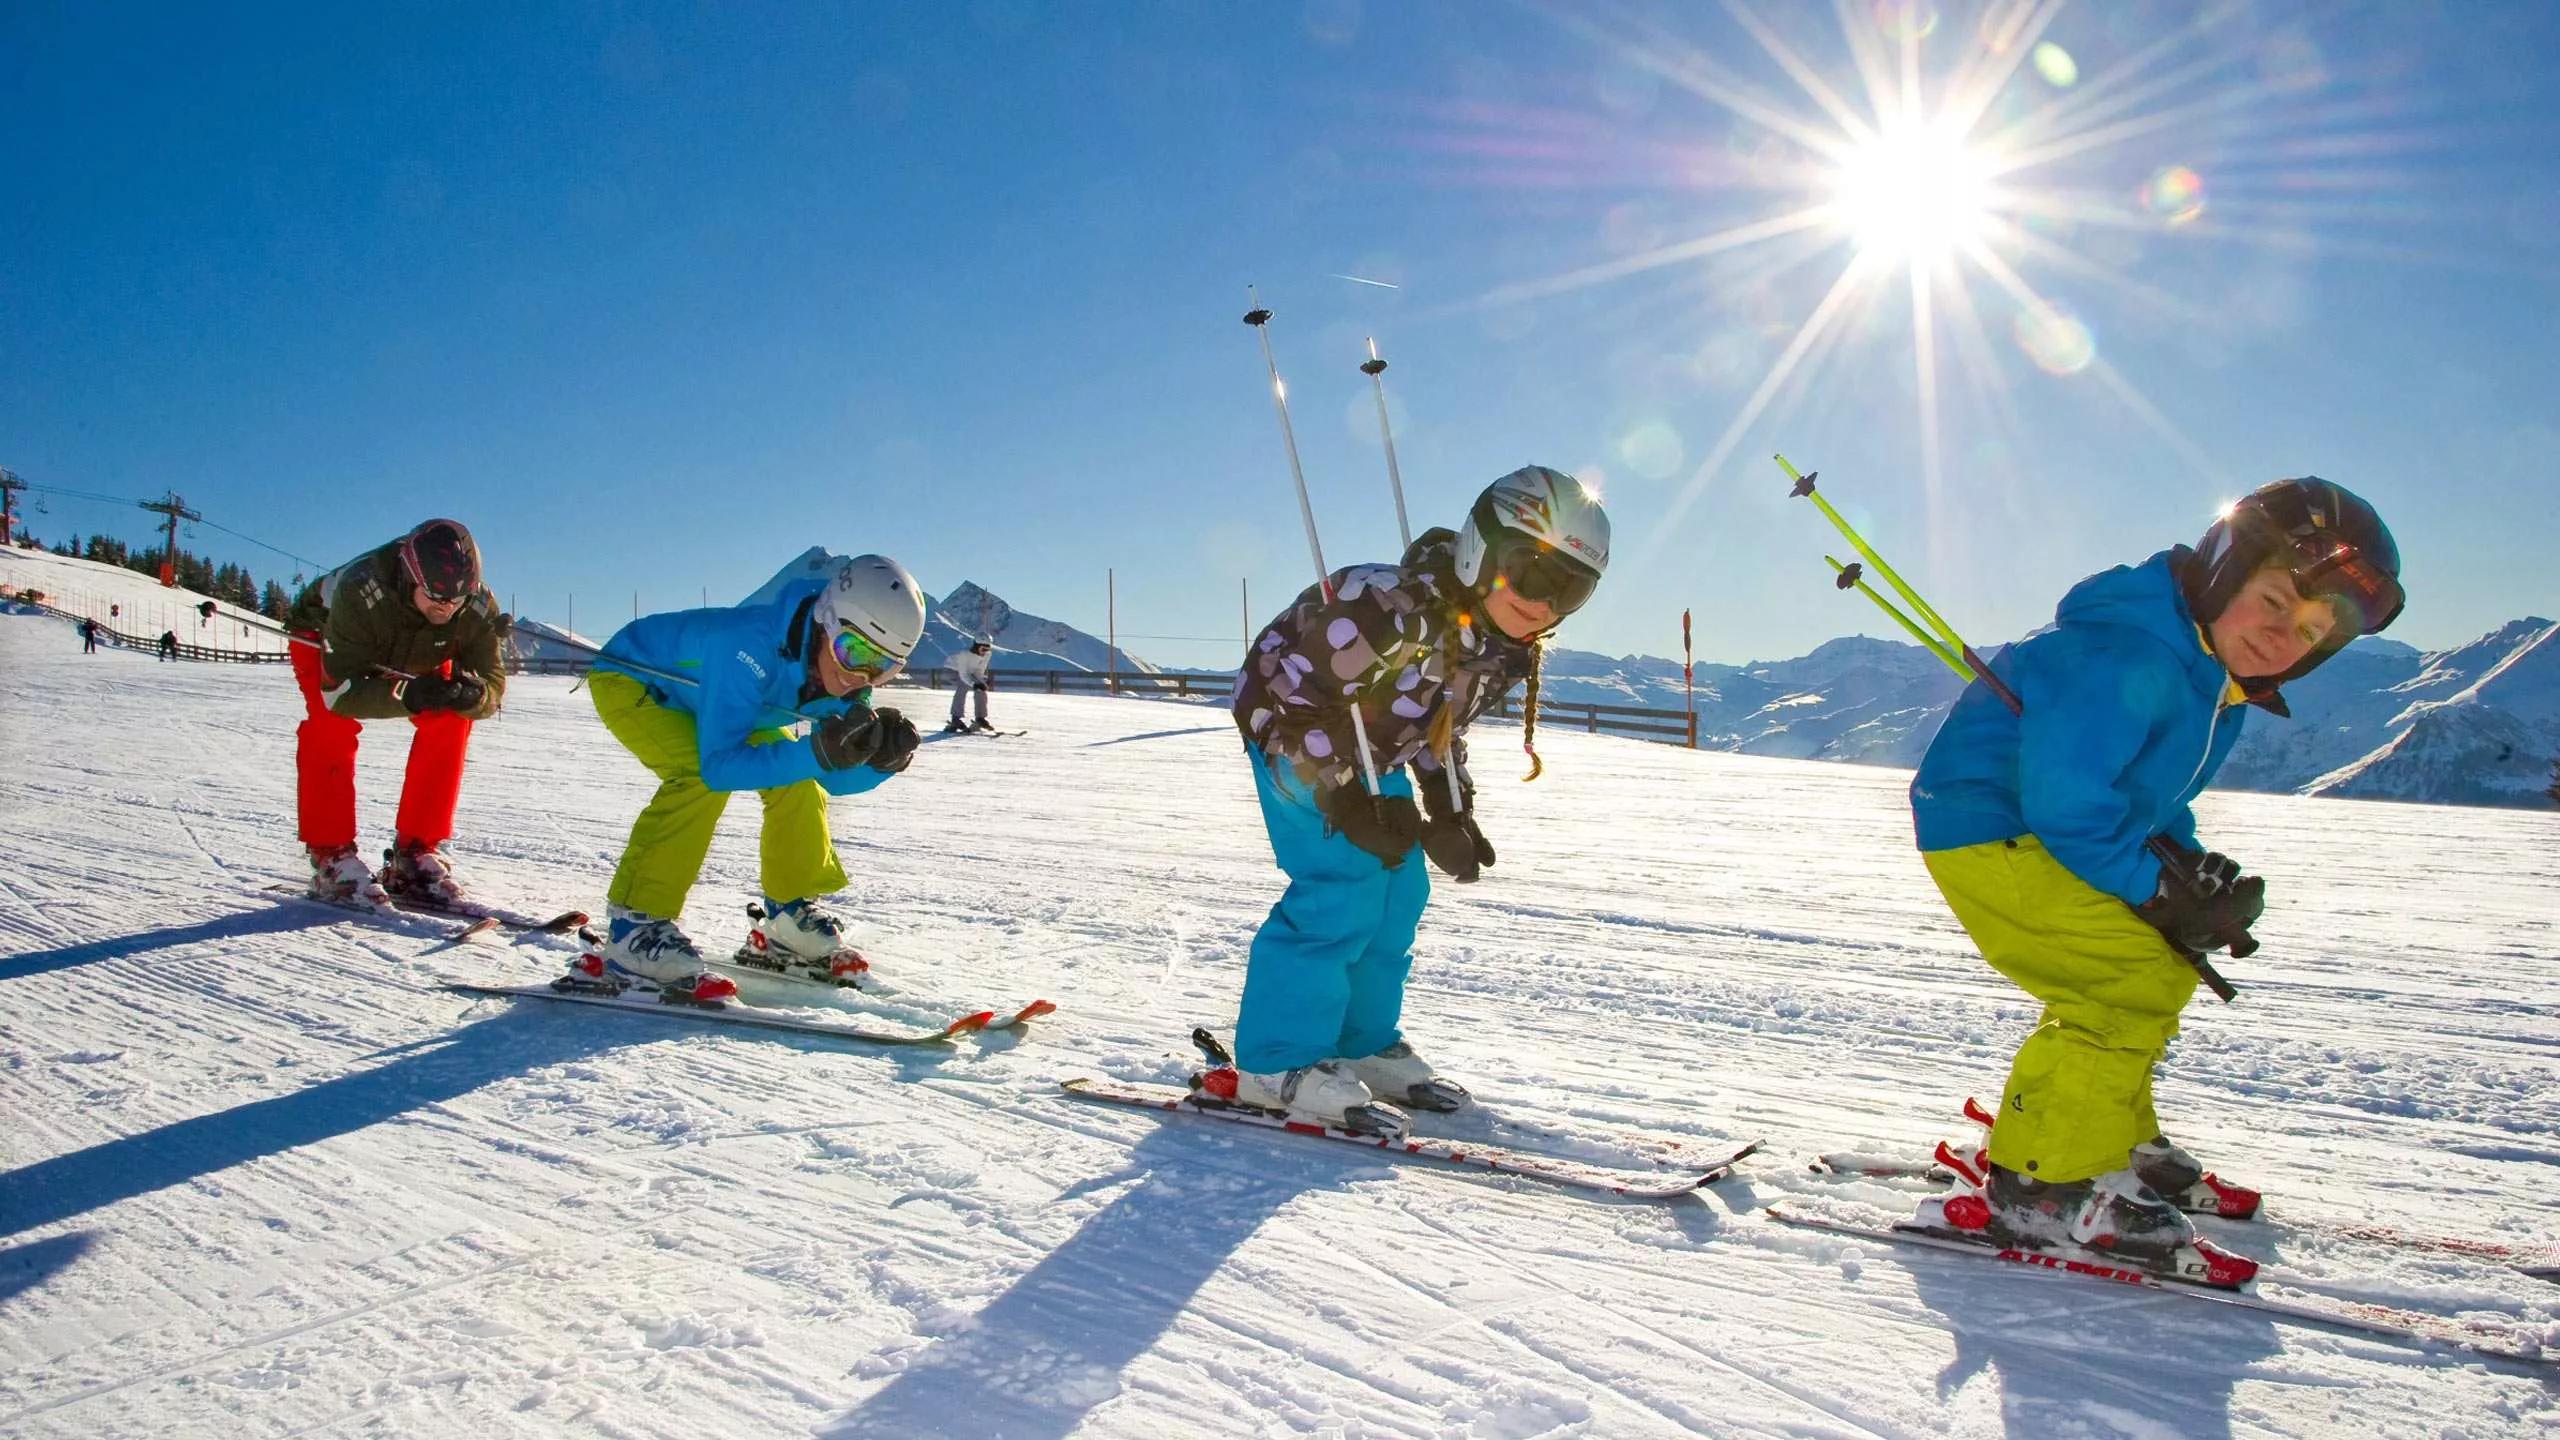 School Skijanja in Serbia, Europe | Snowboarding,Skiing - Rated 0.7